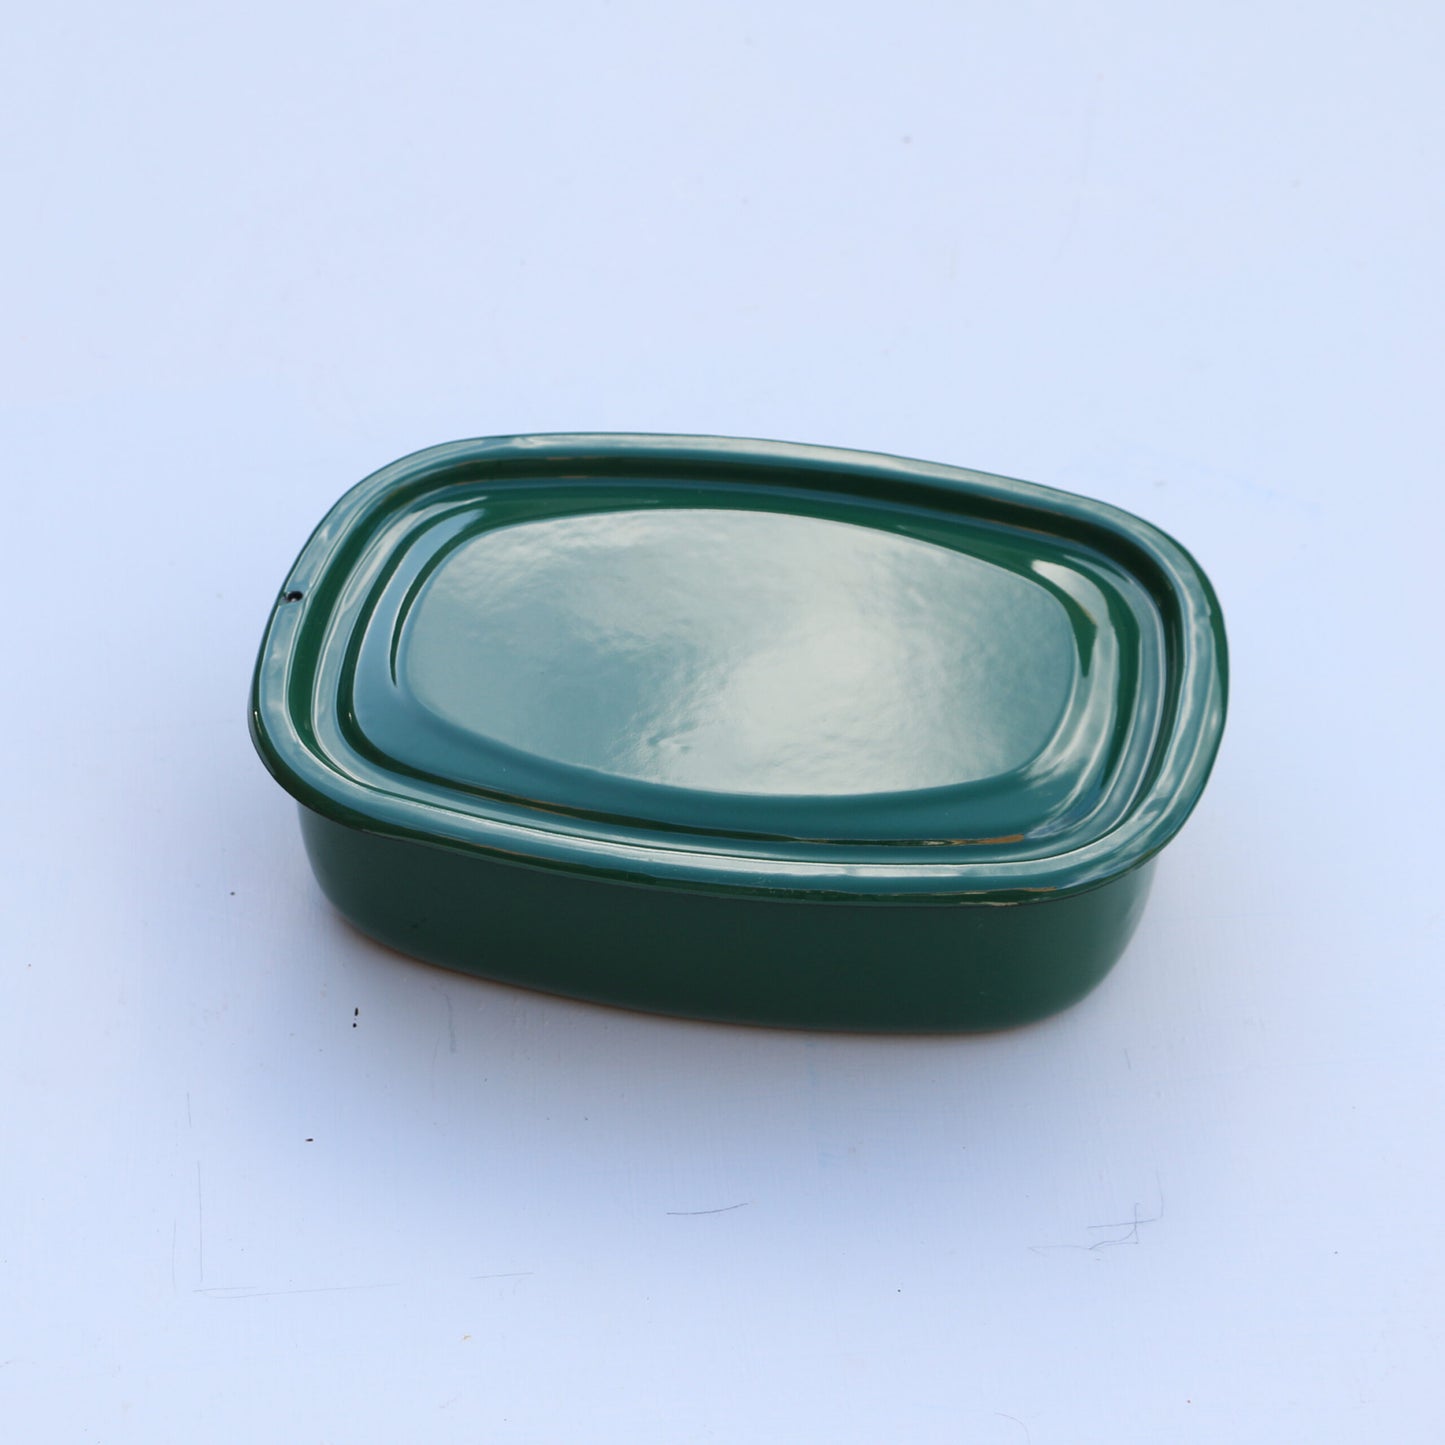 Enamel dish with lid: Small dark green